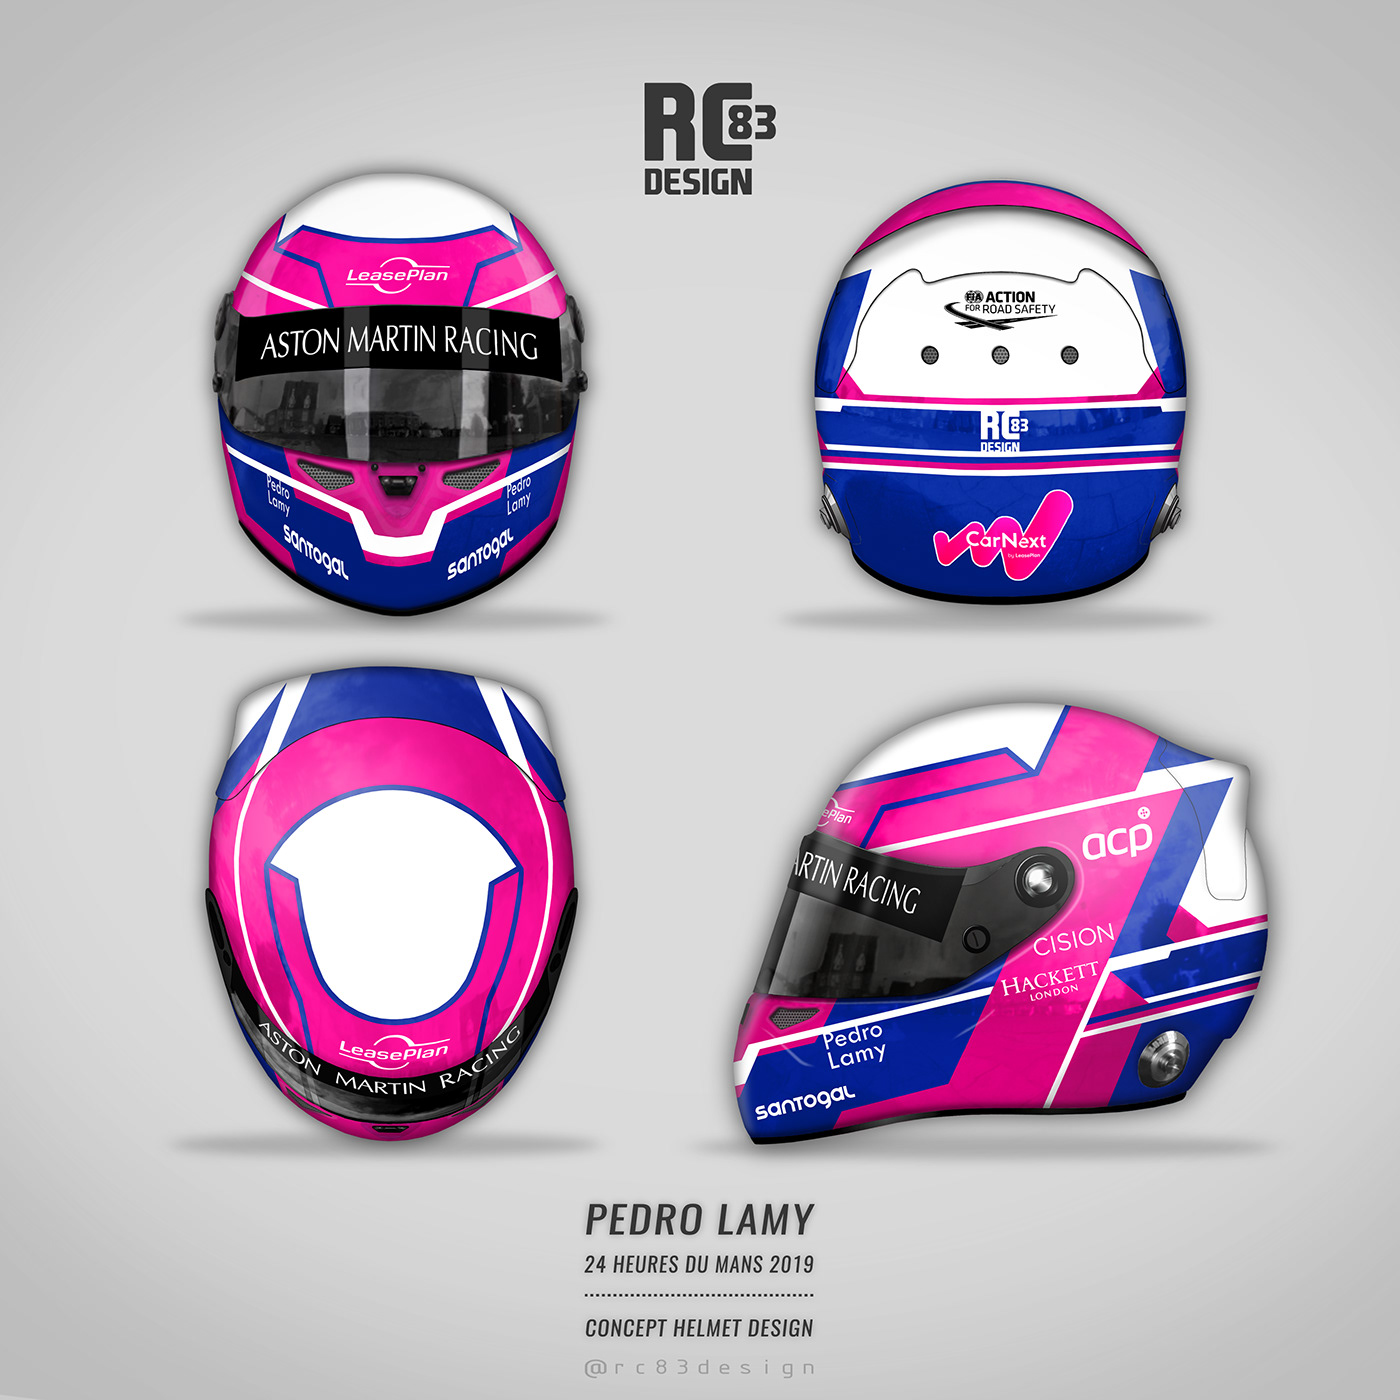 Helmet helmet design concept helmet concept design graphic design  pedro lamy motorsports Formula 1 formula one rc83design